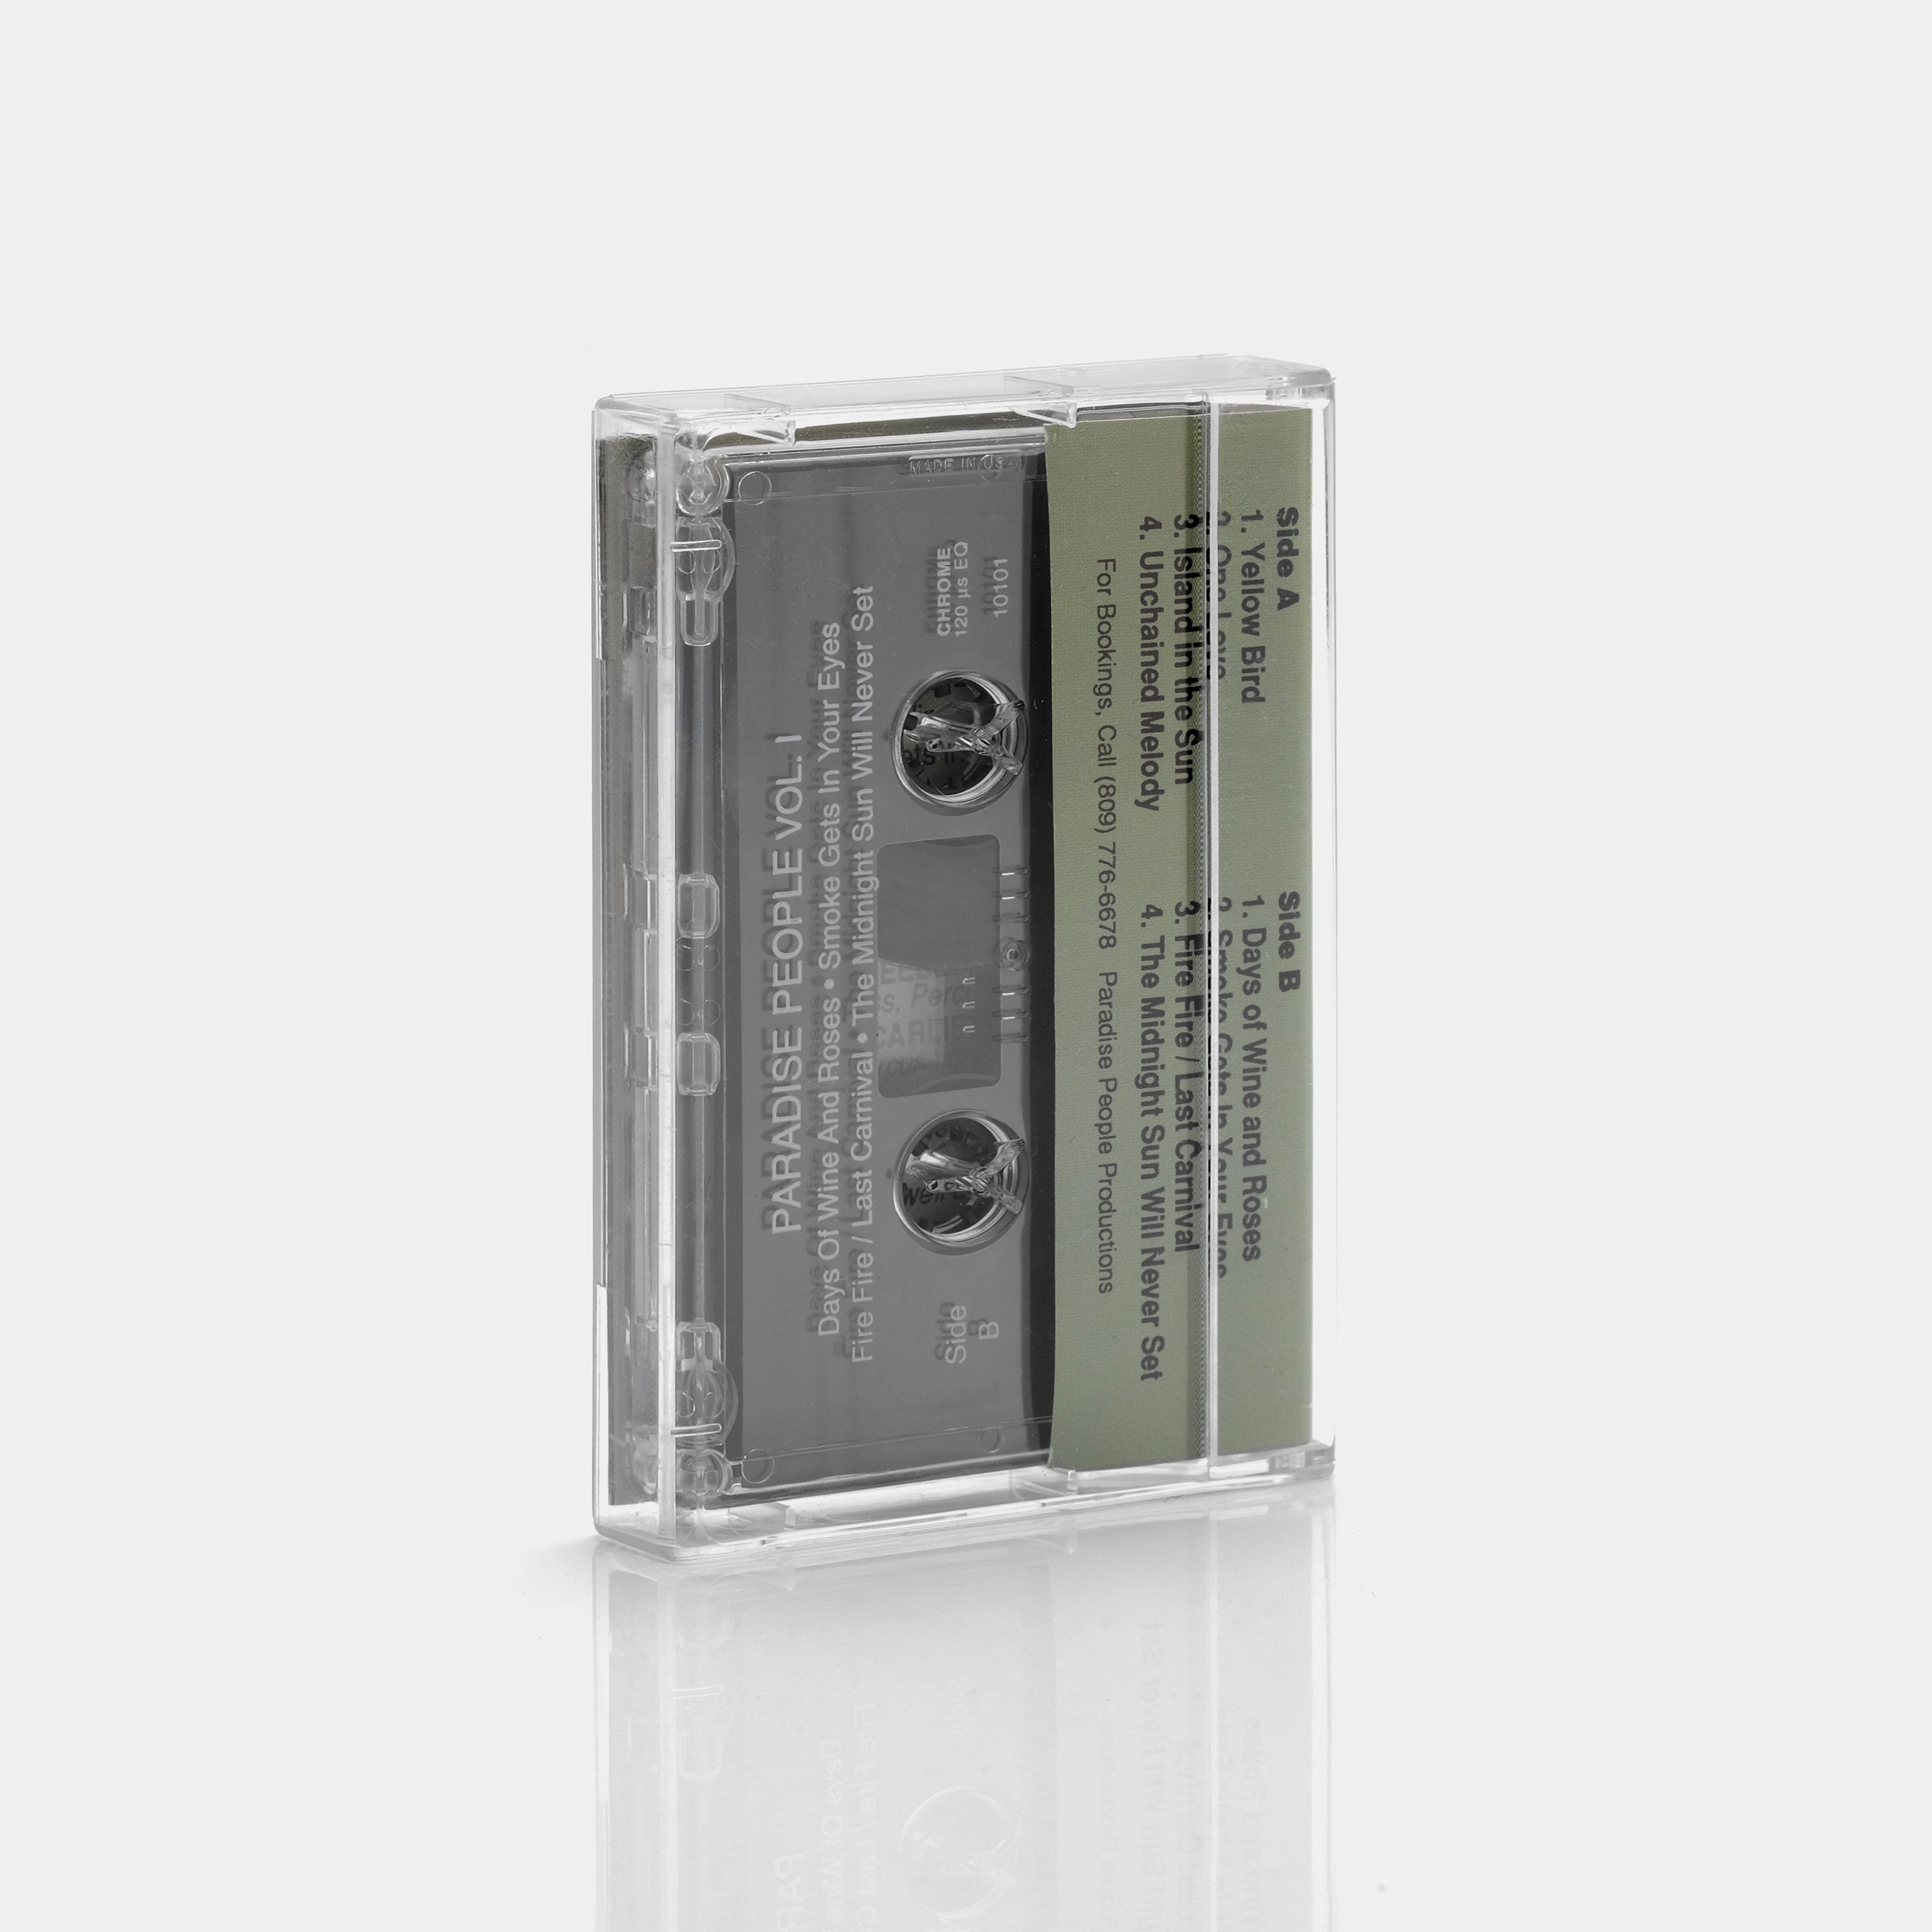 Paradise People - Vol. 1 Cassette Tape